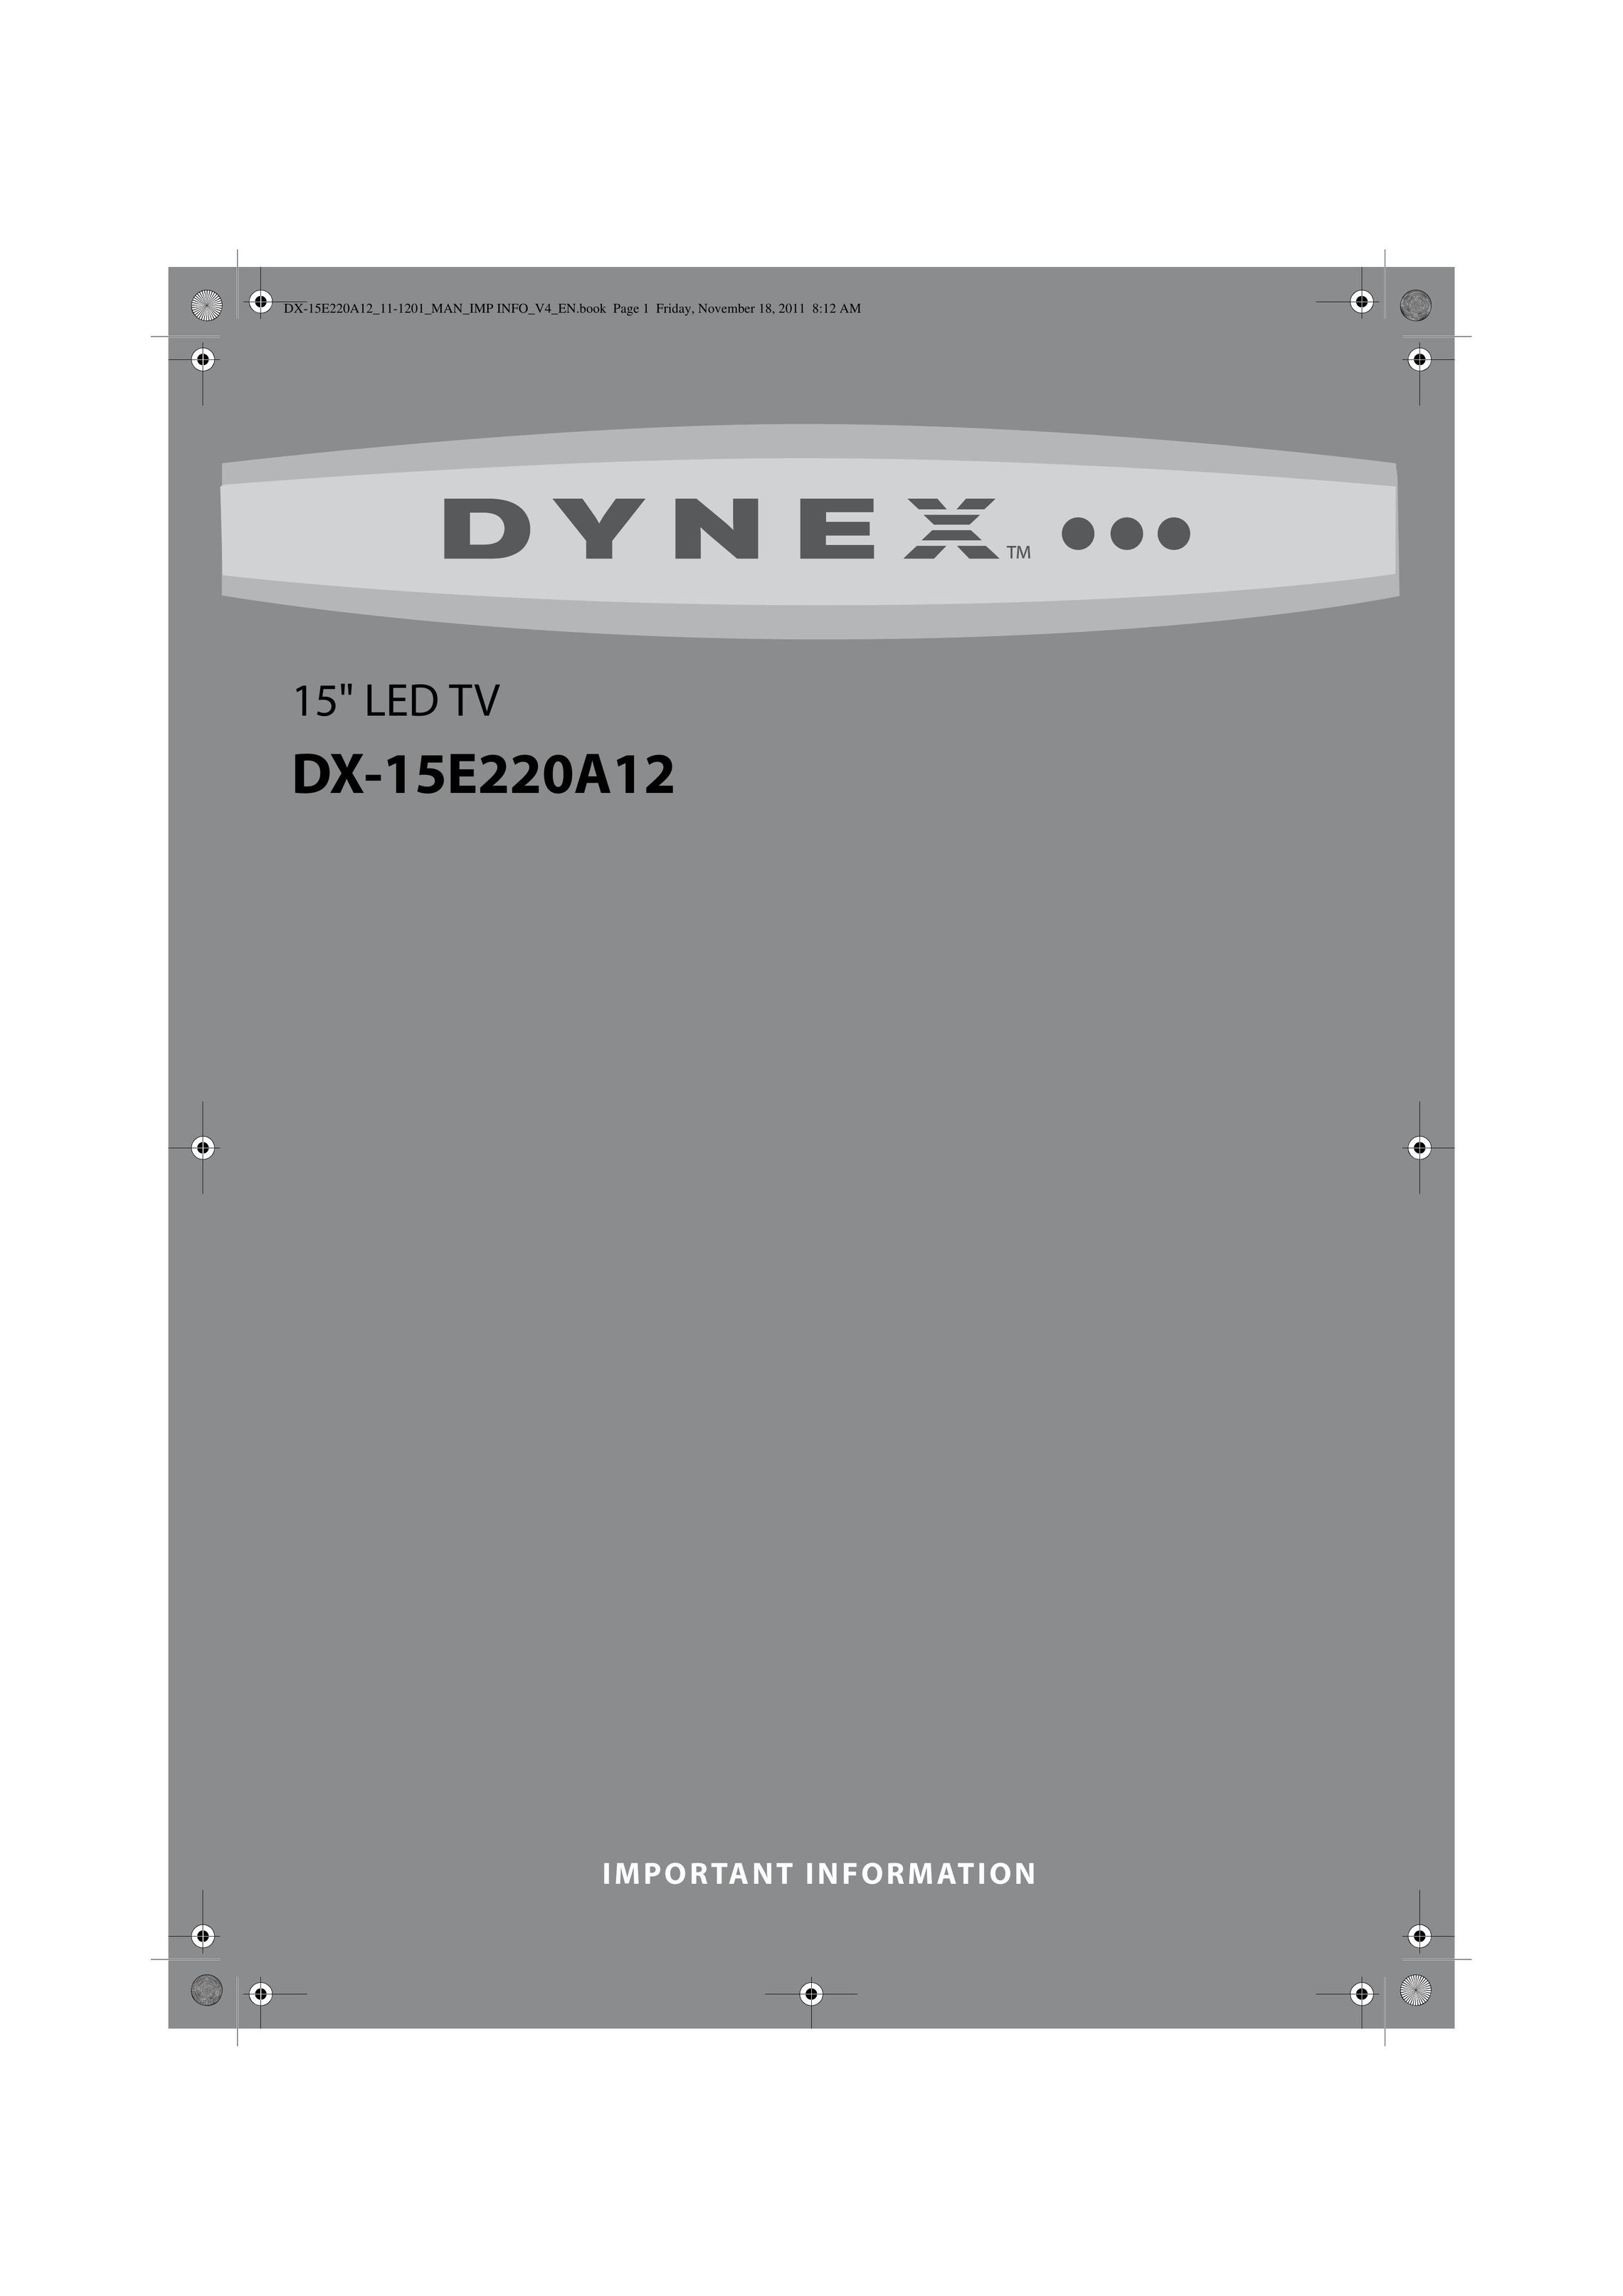 Dynex DX-15E220A12 CRT Television User Manual